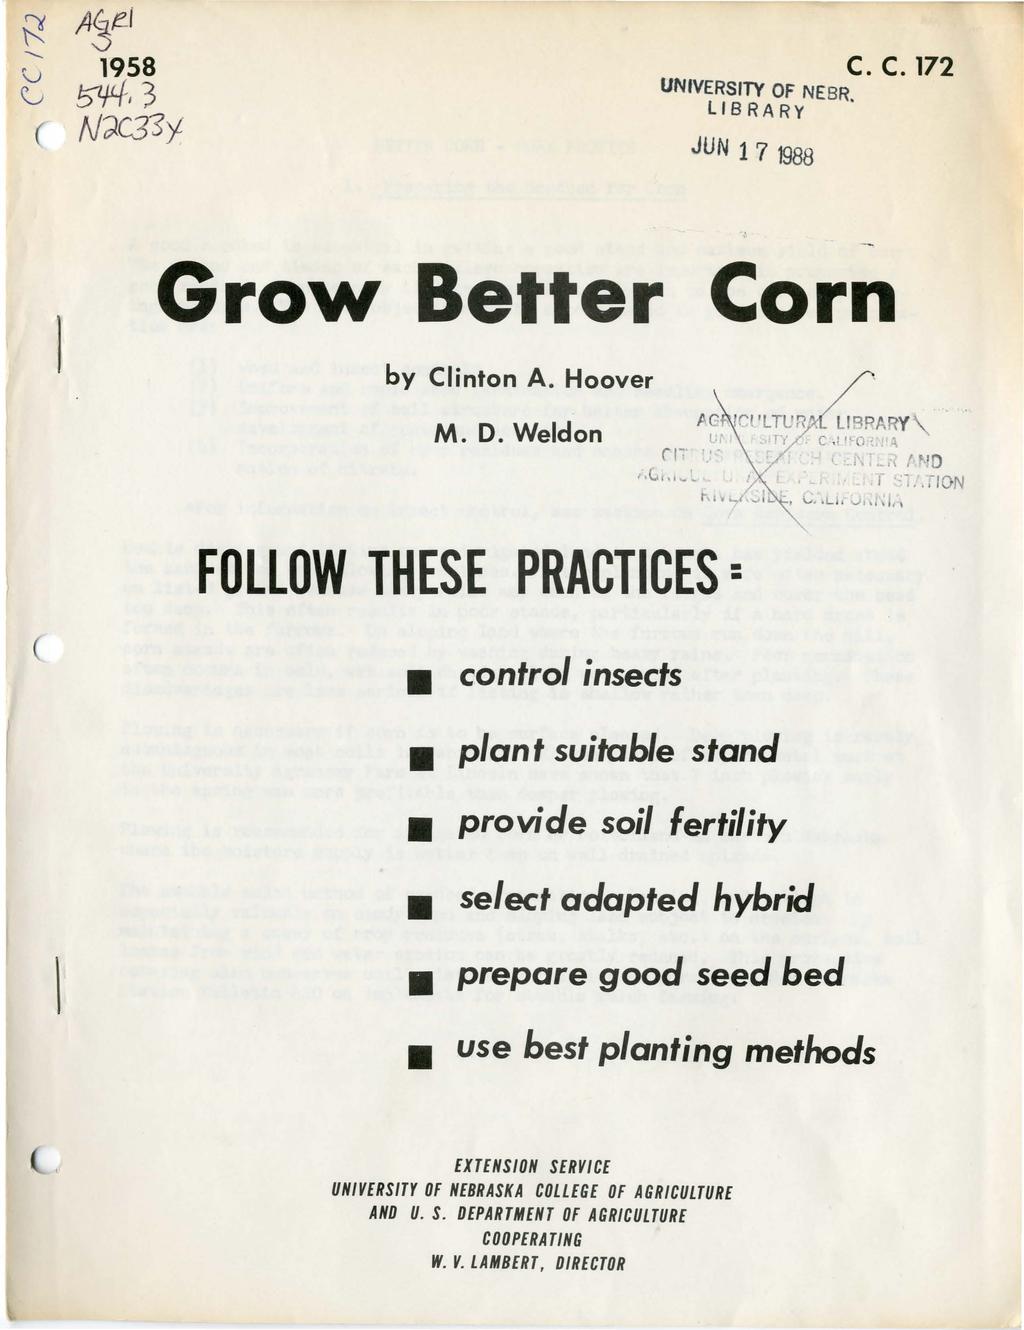 c. c. 172 UNIVERSITY OF NEBR. LIBRARY JUN 1 7 1988 Grow Better Corn by Clinton A. Hoover M.D.